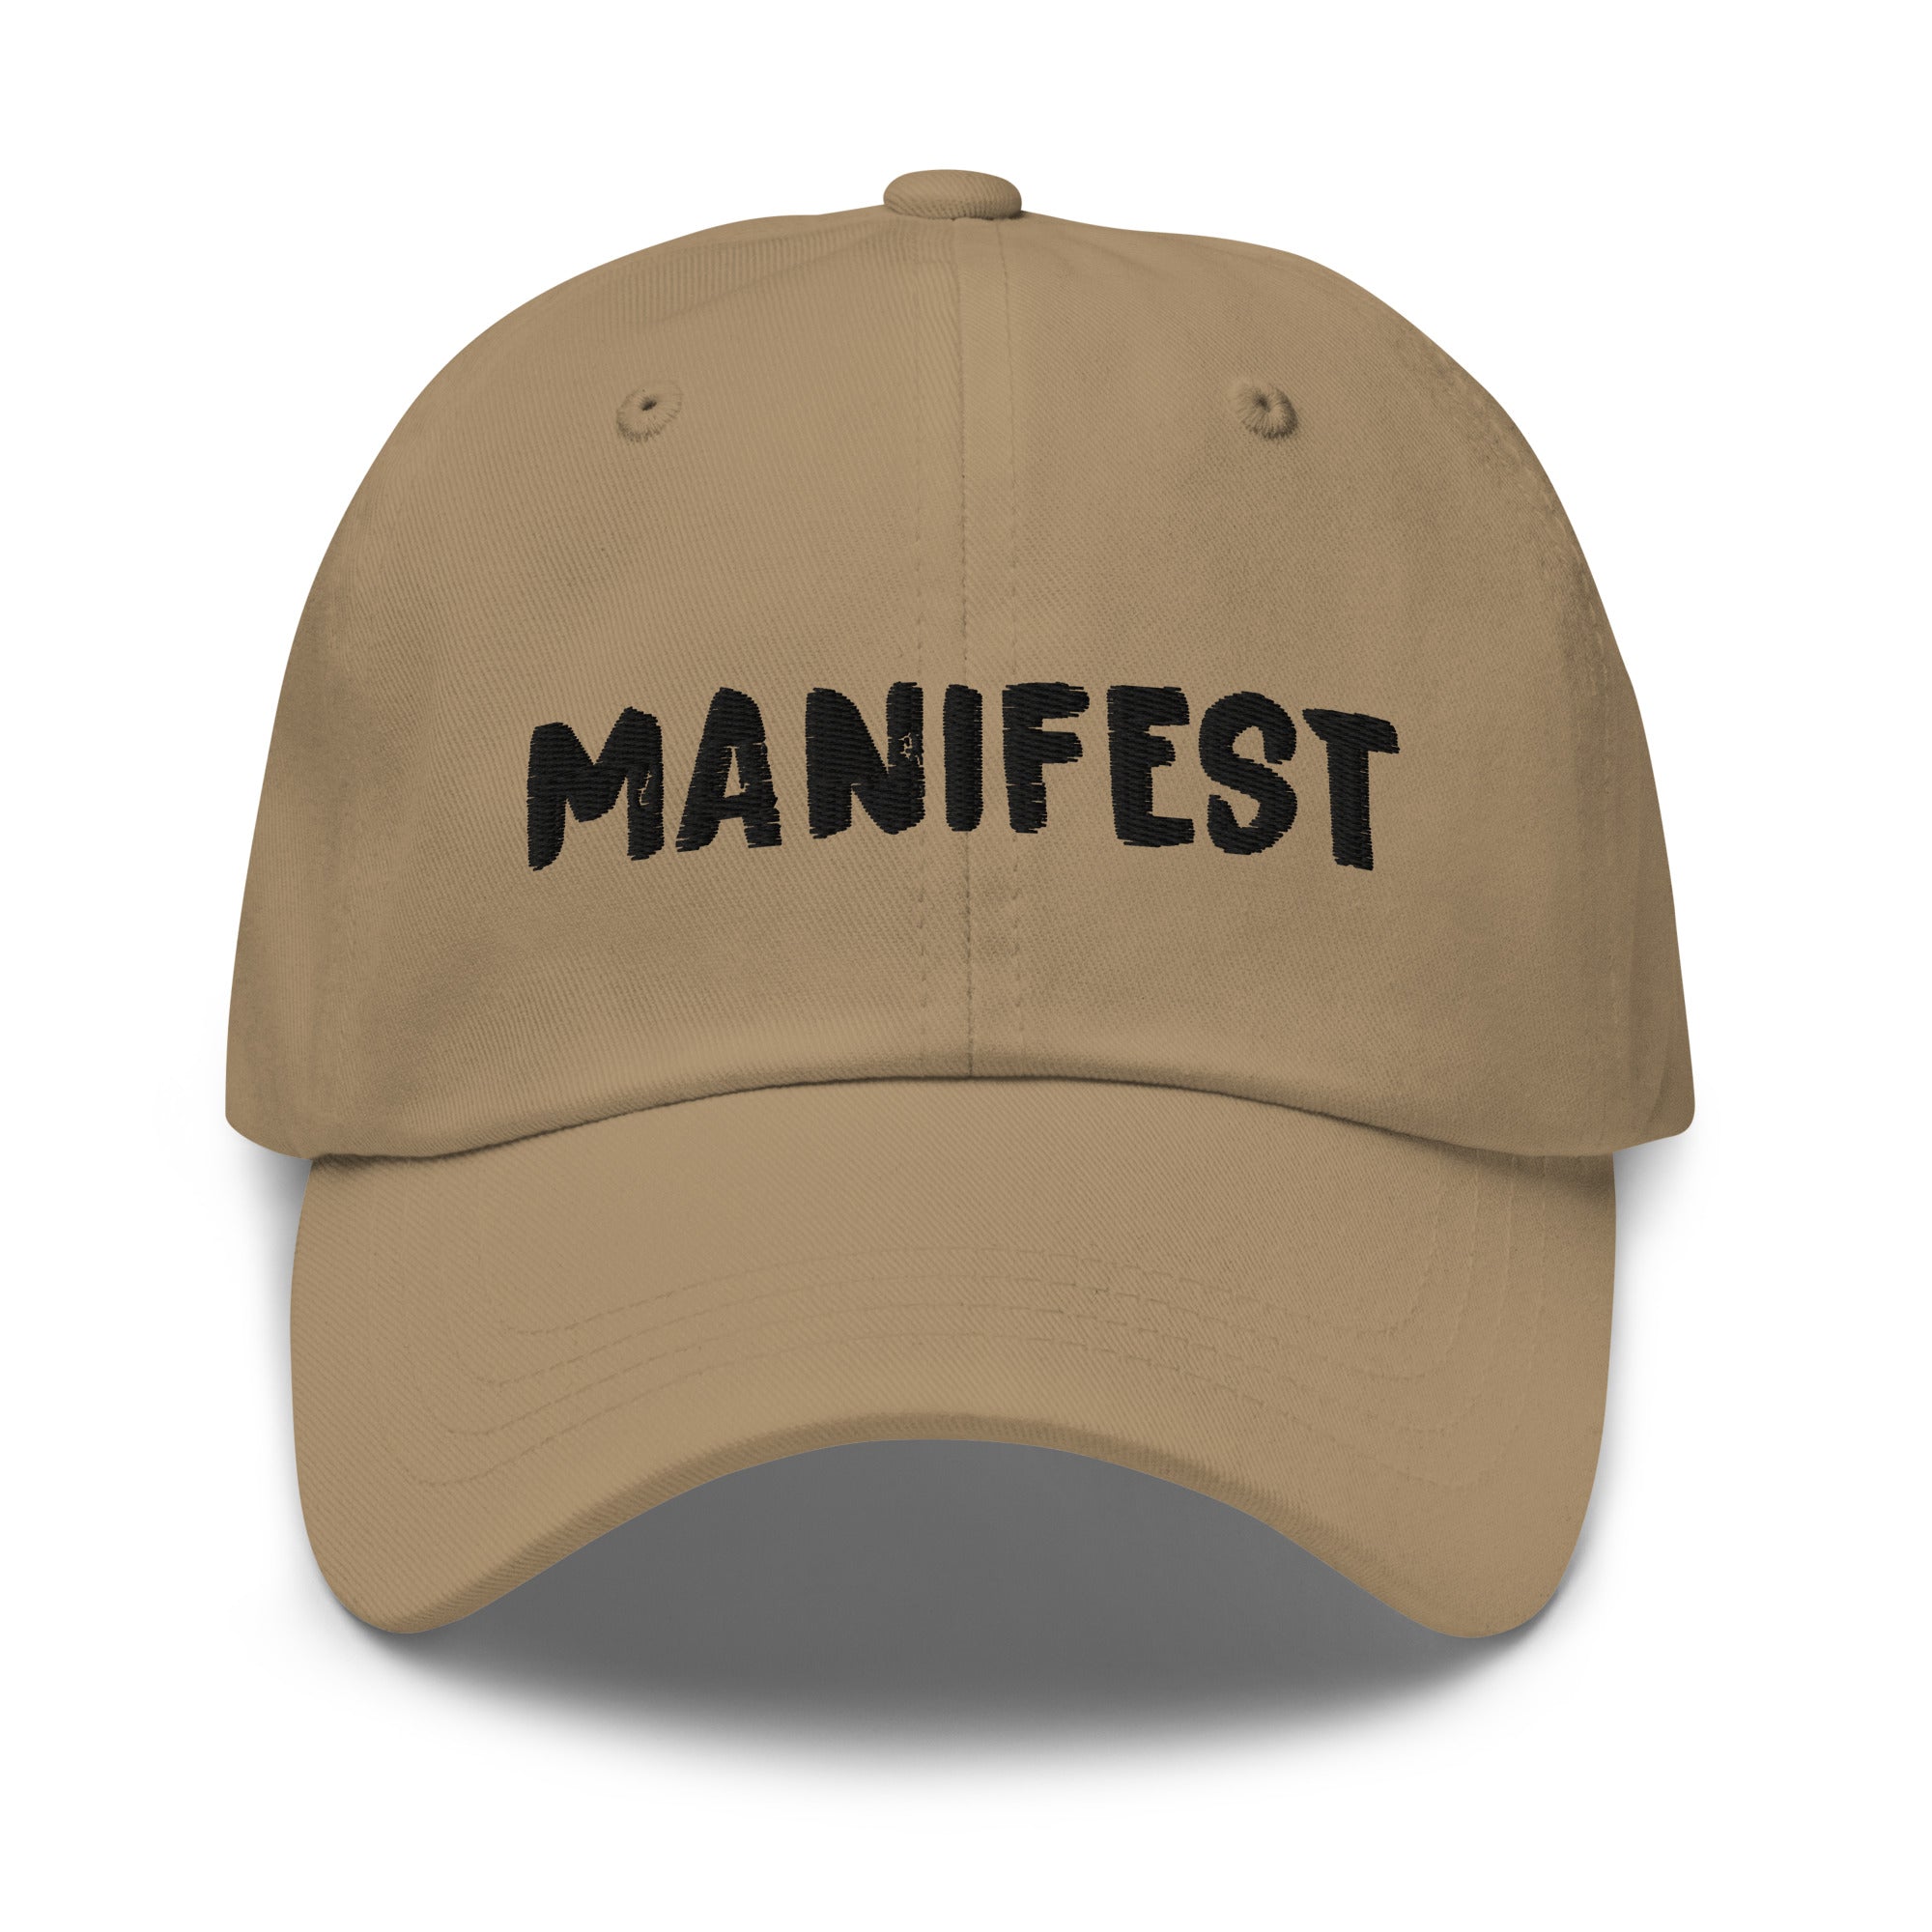 Manifest Hat